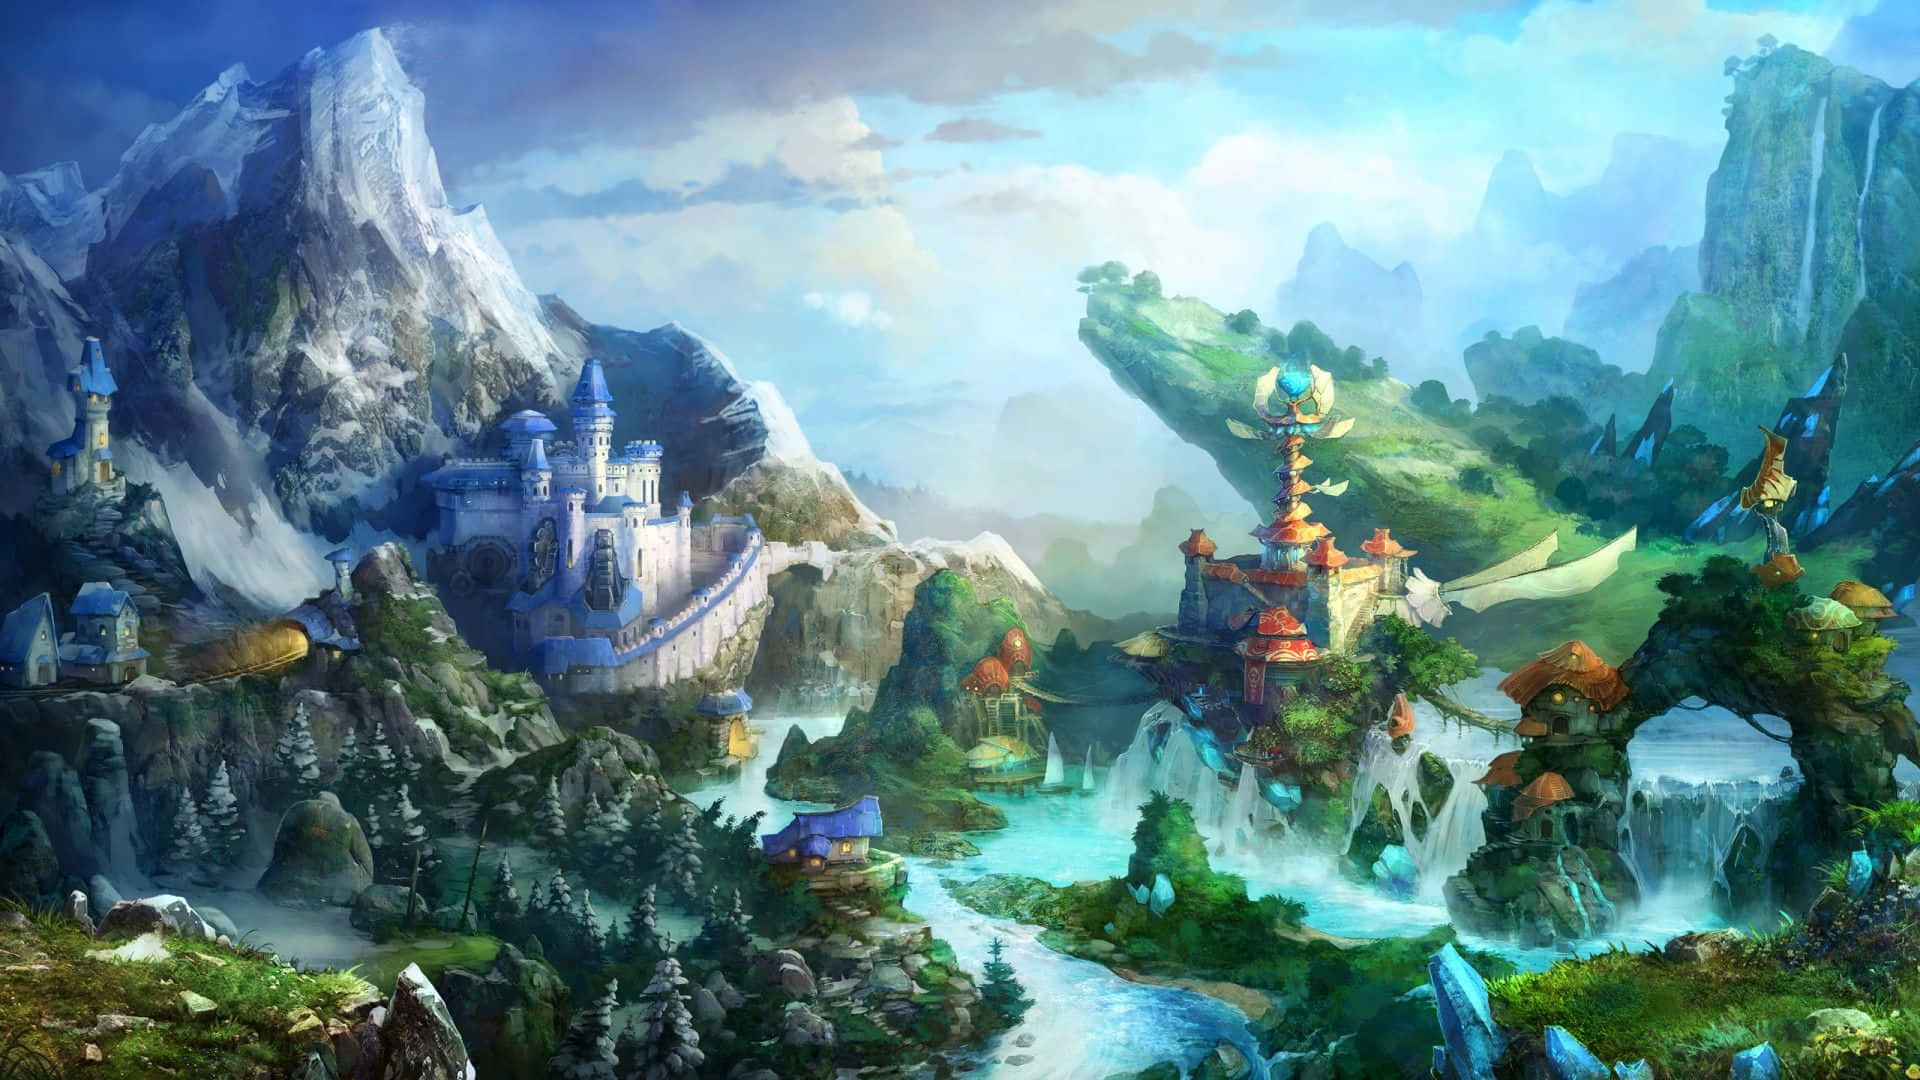 Adventure Awaits in the Stunning RPG Fantasy World Wallpaper